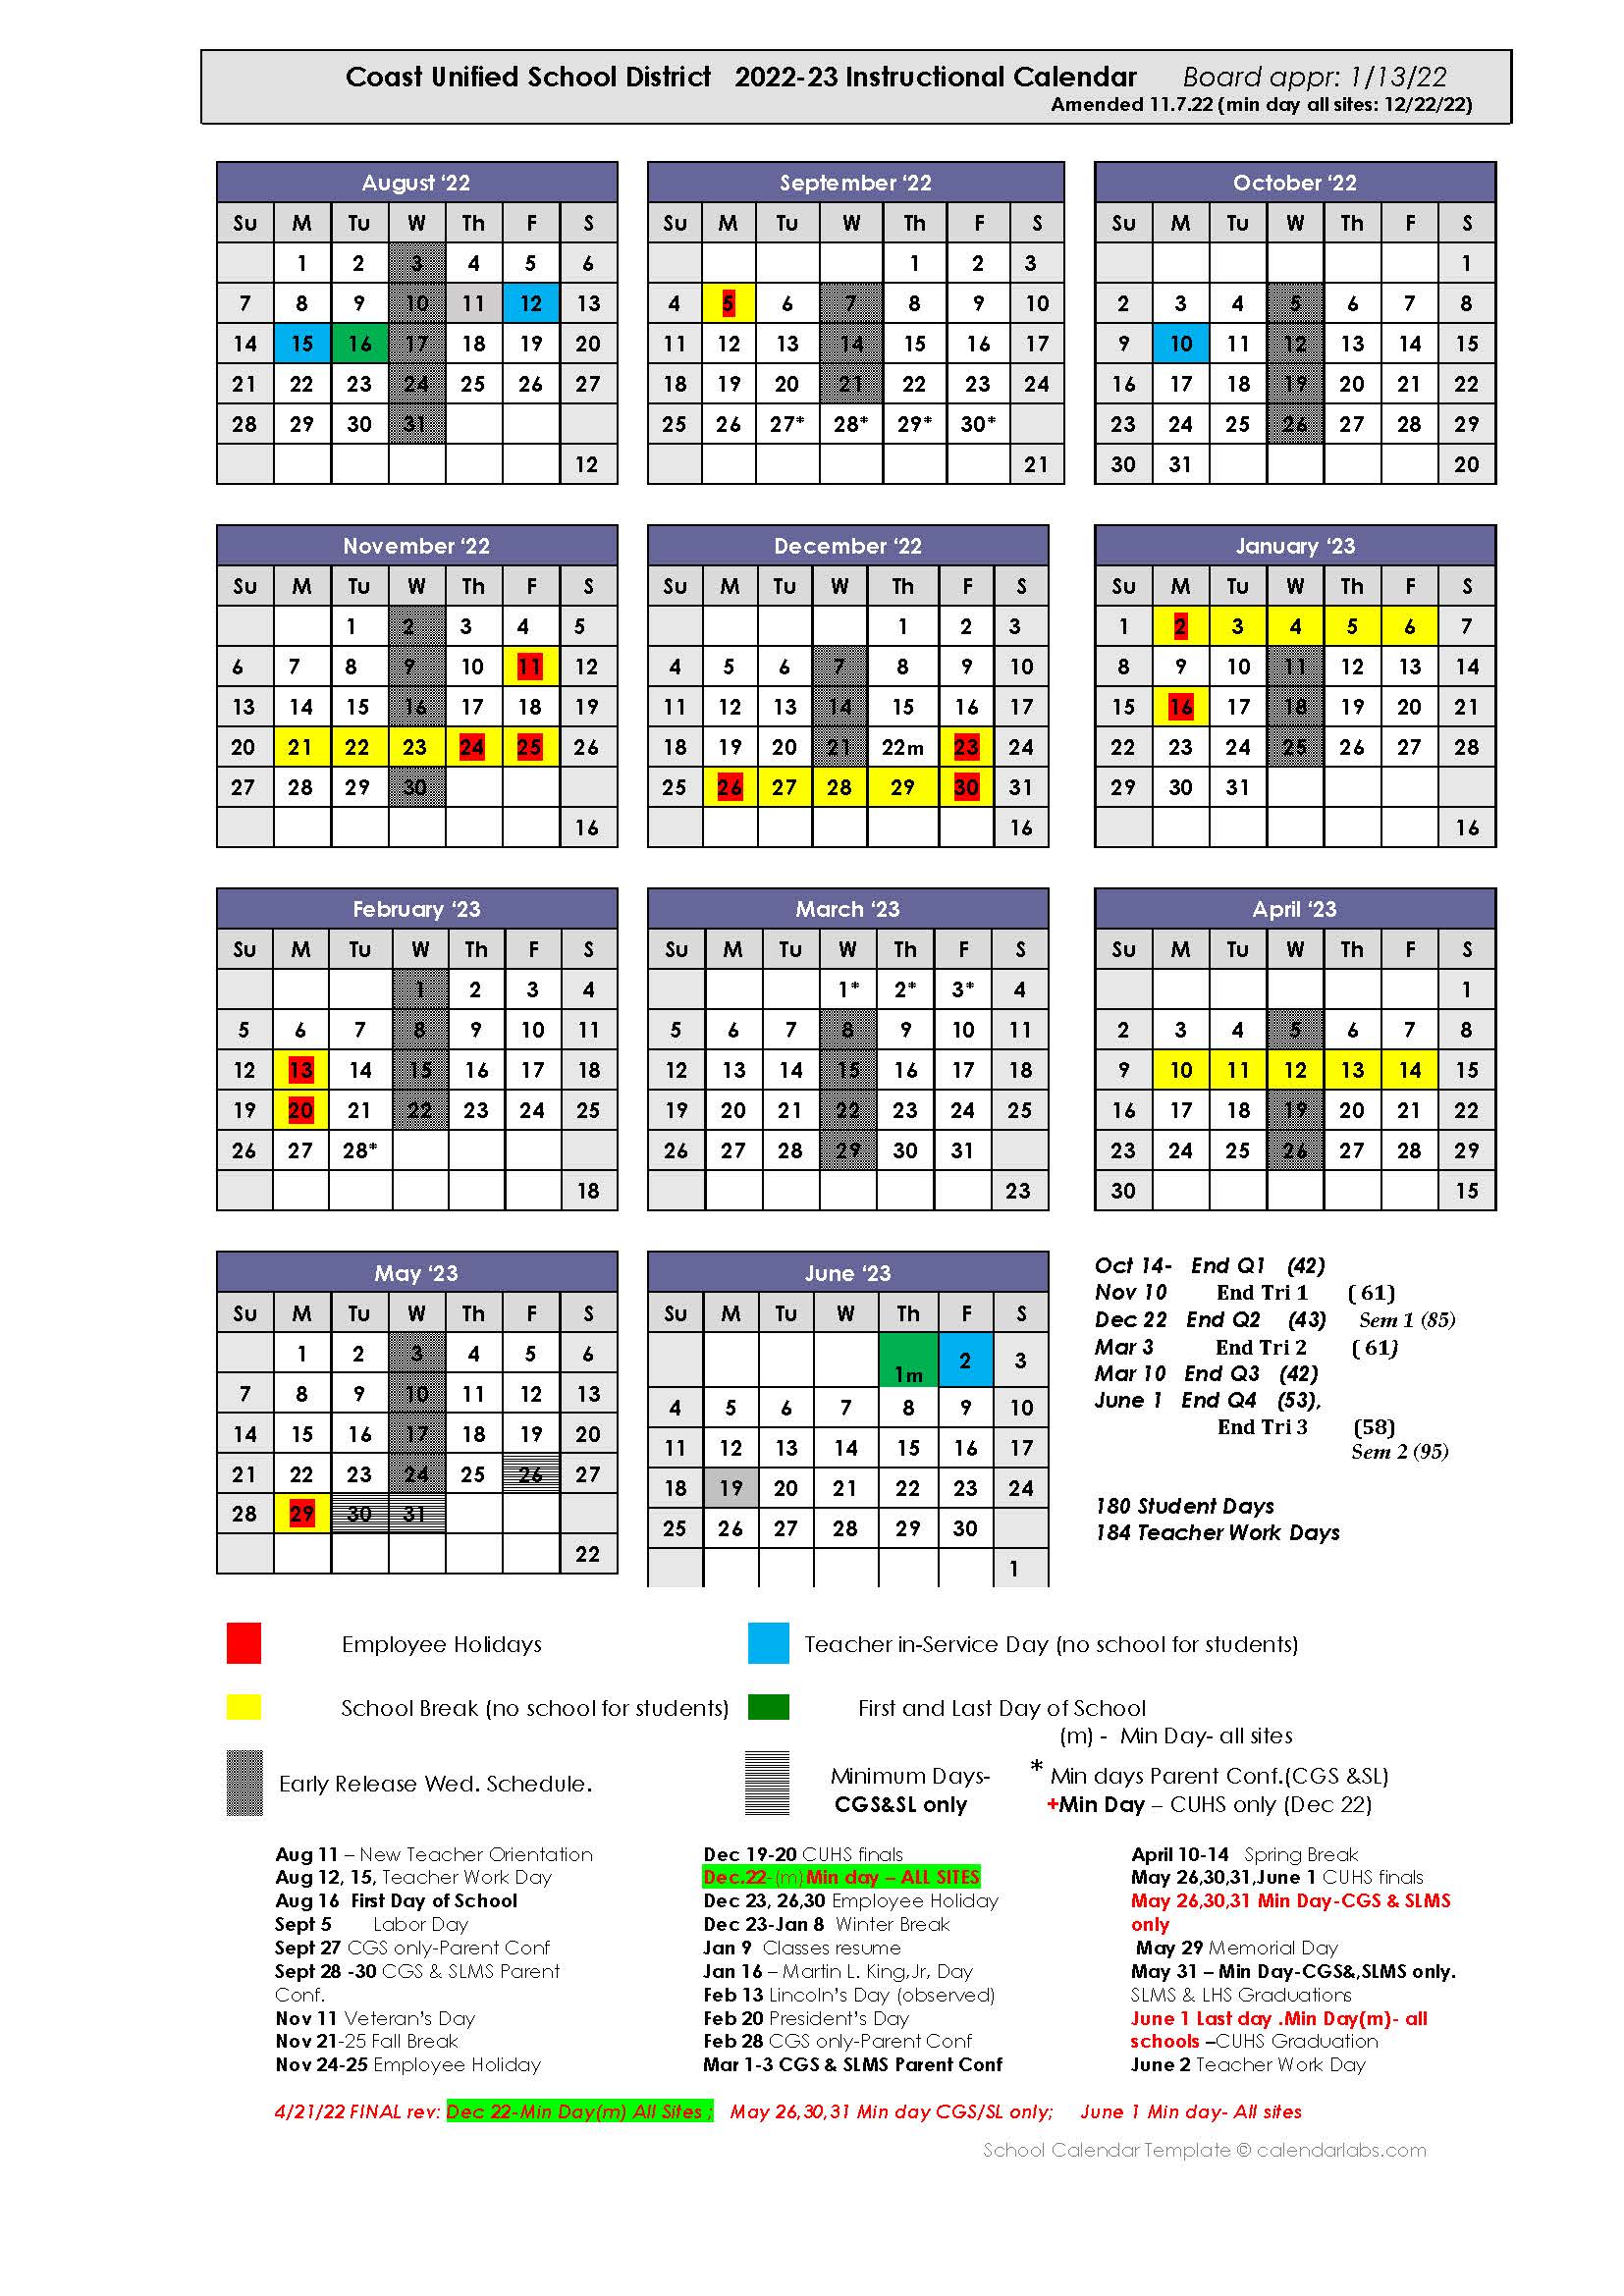 Coast Unified School District Calendar 2023-2024